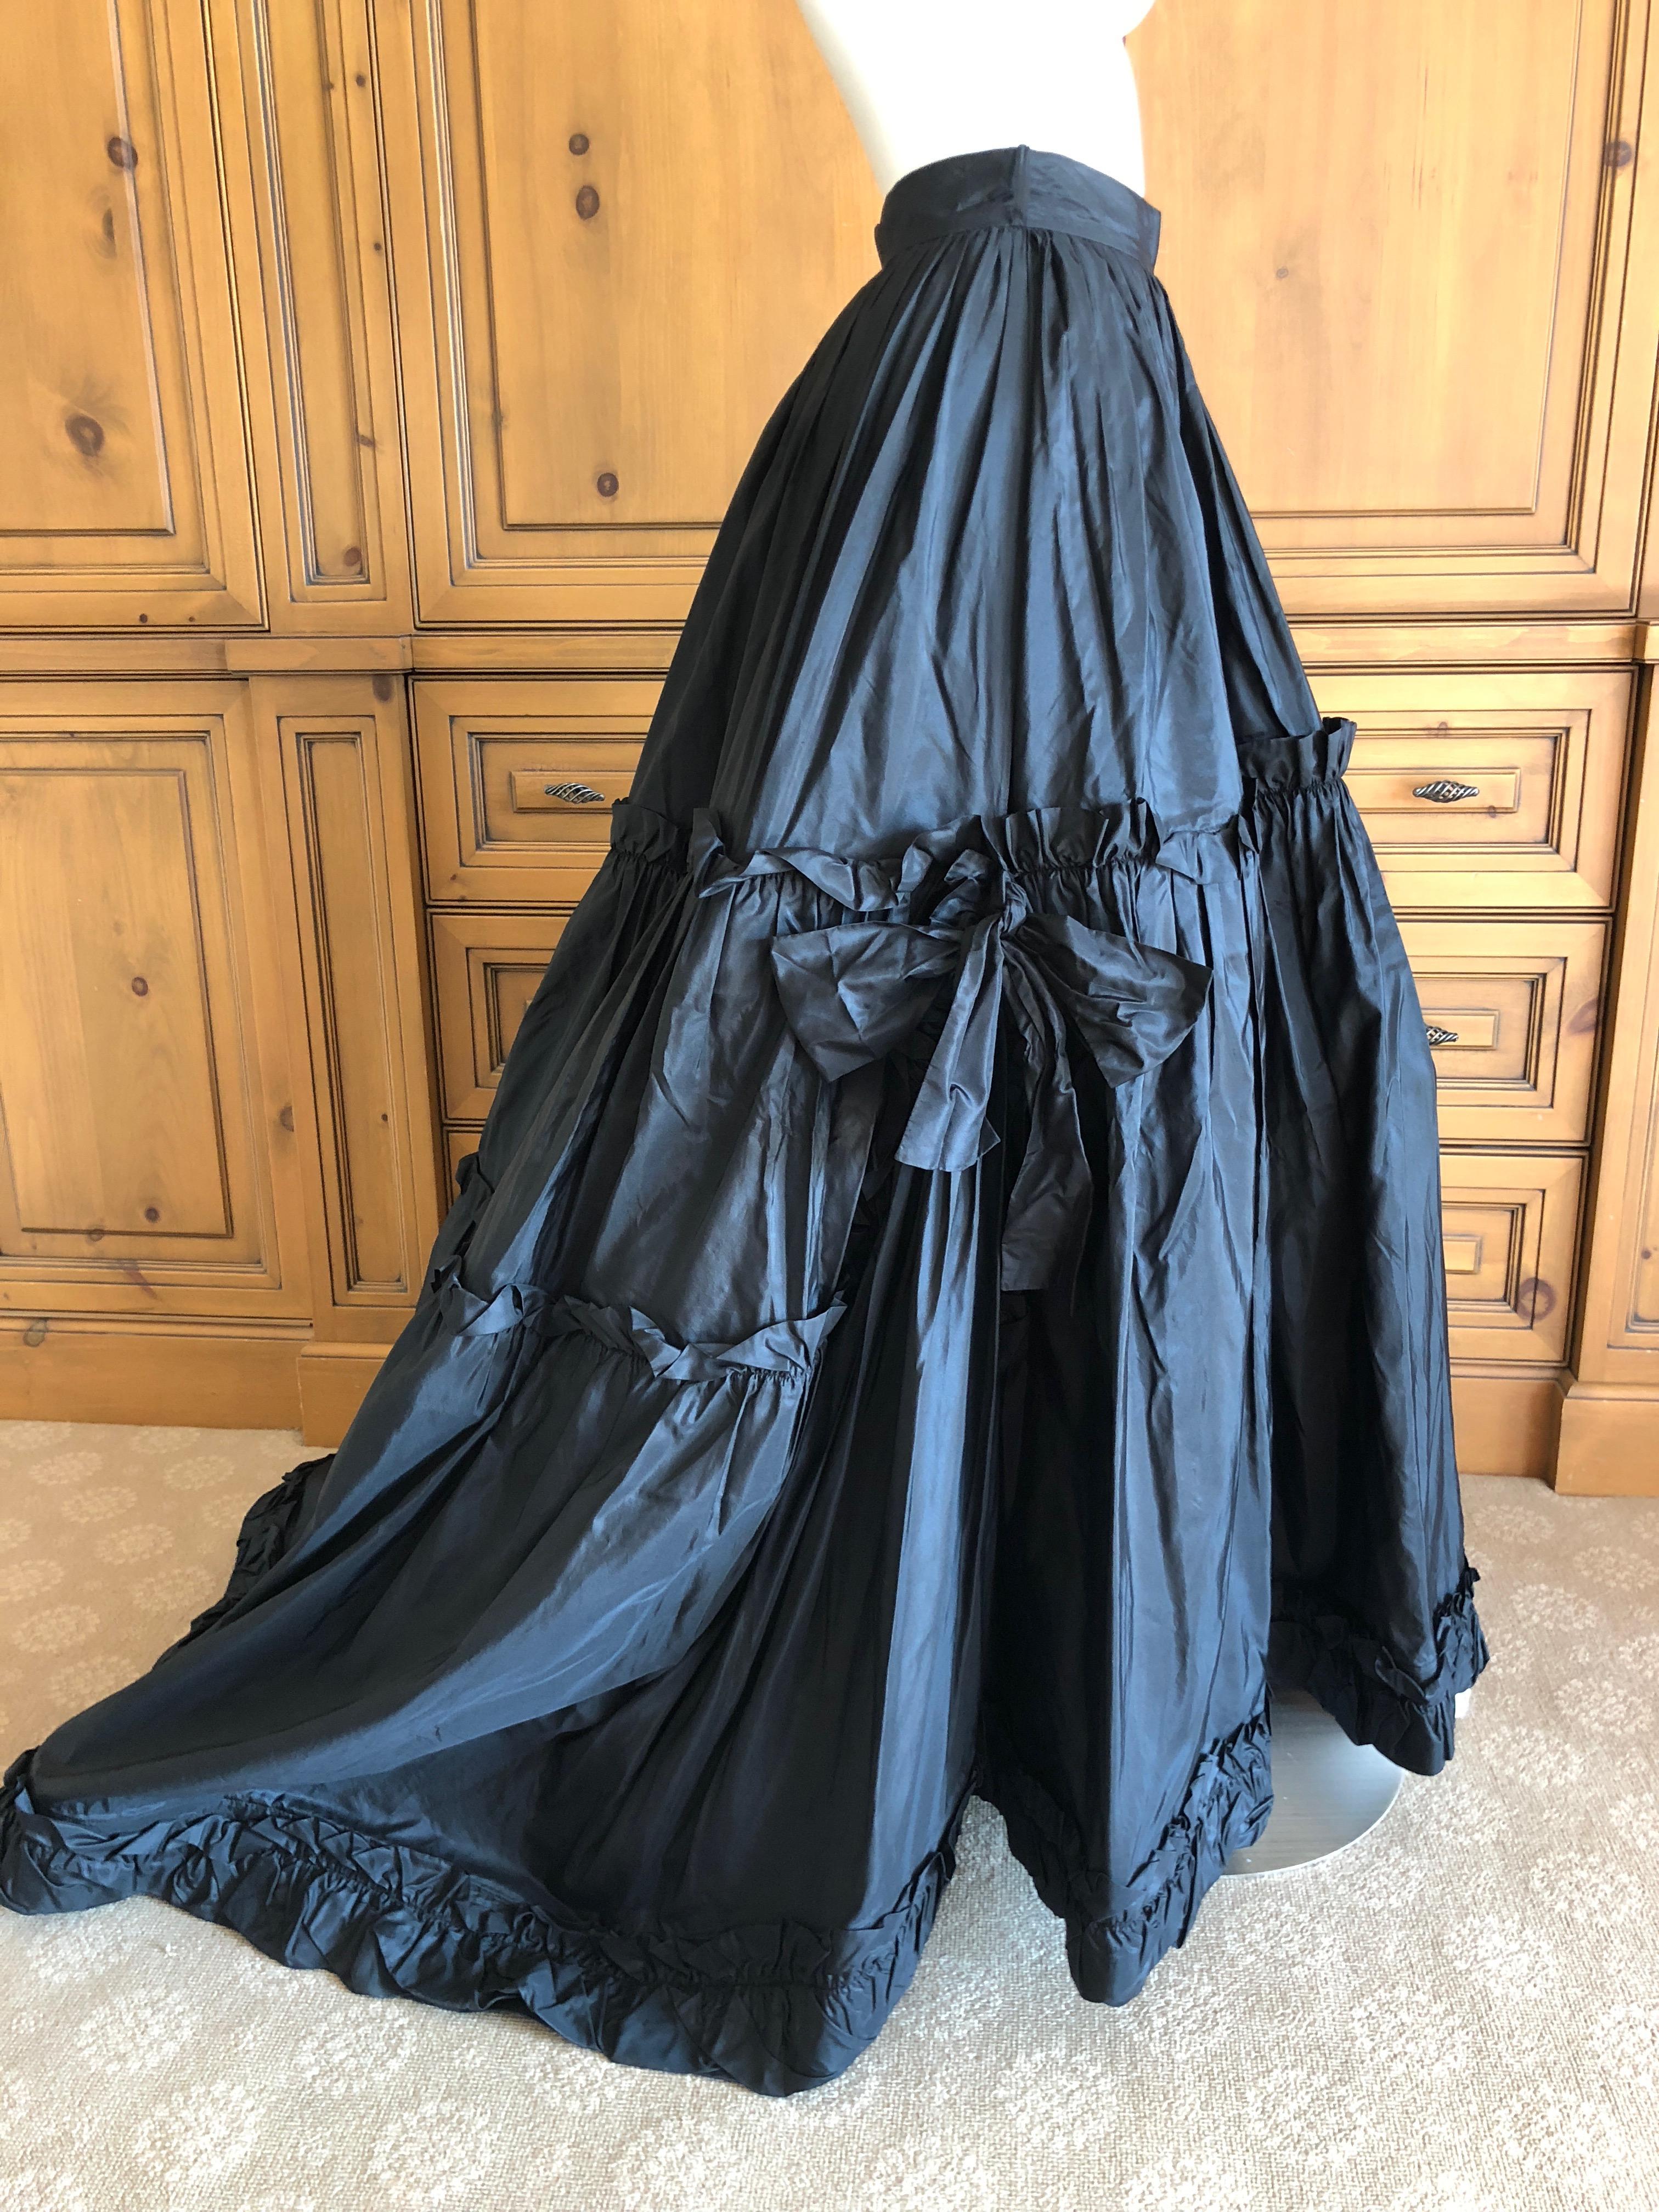 Yves Saint Laurent Rive Guache 1982 Dramatic Black Taffeta Ball Skirt with Train For Sale 1